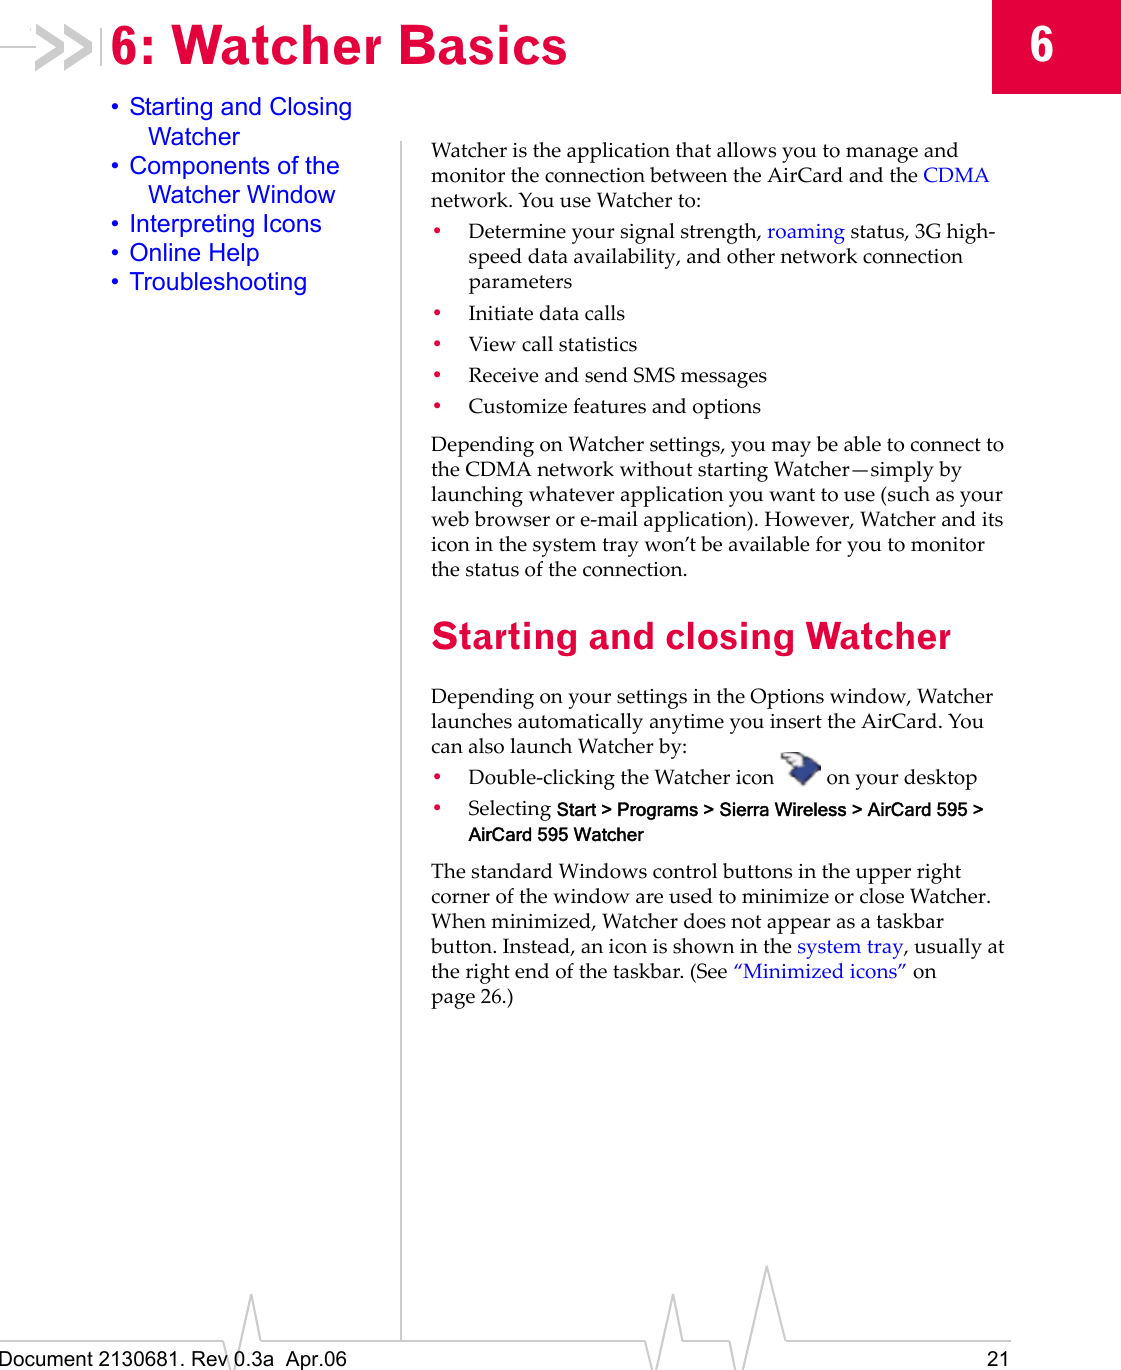 Document 2130681. Rev 0.3a  Apr.06 2166: Watcher Basics• Starting and Closing Watcher• Components of the Watcher Window• Interpreting Icons• Online Help• TroubleshootingWatcherȱisȱtheȱapplicationȱthatȱallowsȱyouȱtoȱmanageȱandȱmonitorȱtheȱconnectionȱbetweenȱtheȱAirCardȱandȱtheȱCDMAȱnetwork.ȱYouȱuseȱWatcherȱto:•Determineȱyourȱsignalȱstrength,ȱroamingȱstatus,ȱ3GȱhighȬspeedȱdataȱavailability,ȱandȱotherȱnetworkȱconnectionȱparameters•Initiateȱdataȱcalls•Viewȱcallȱstatistics•ReceiveȱandȱsendȱSMSȱmessages•CustomizeȱfeaturesȱandȱoptionsDependingȱonȱWatcherȱsettings,ȱyouȱmayȱbeȱableȱtoȱconnectȱtoȱtheȱCDMAȱnetworkȱwithoutȱstartingȱWatcher—simplyȱbyȱlaunchingȱwhateverȱapplicationȱyouȱwantȱtoȱuseȱ(suchȱasȱyourȱwebȱbrowserȱorȱeȬmailȱapplication).ȱHowever,ȱWatcherȱandȱitsȱiconȱinȱtheȱsystemȱtrayȱwon’tȱbeȱavailableȱforȱyouȱtoȱmonitorȱtheȱstatusȱofȱtheȱconnection.Starting and closing WatcherDependingȱonȱyourȱsettingsȱinȱtheȱOptionsȱwindow,ȱWatcherȱlaunchesȱautomaticallyȱanytimeȱyouȱinsertȱtheȱAirCard.ȱYouȱcanȱalsoȱlaunchȱWatcherȱby:•DoubleȬclickingȱtheȱWatcherȱicon ȱonȱyourȱdesktop•SelectingȱStart &gt; Programs &gt; Sierra Wireless &gt; AirCard 595 &gt; AirCard 595 WatcherTheȱstandardȱWindowsȱcontrolȱbuttonsȱinȱtheȱupperȱrightȱcornerȱofȱtheȱwindowȱareȱusedȱtoȱminimizeȱorȱcloseȱWatcher.ȱWhenȱminimized,ȱWatcherȱdoesȱnotȱappearȱasȱaȱtaskbarȱbutton.ȱInstead,ȱanȱiconȱisȱshownȱinȱtheȱsystemȱtray,ȱusuallyȱatȱtheȱrightȱendȱofȱtheȱtaskbar.ȱ(Seeȱ“Minimizedȱicons”ȱonȱpage 26.)